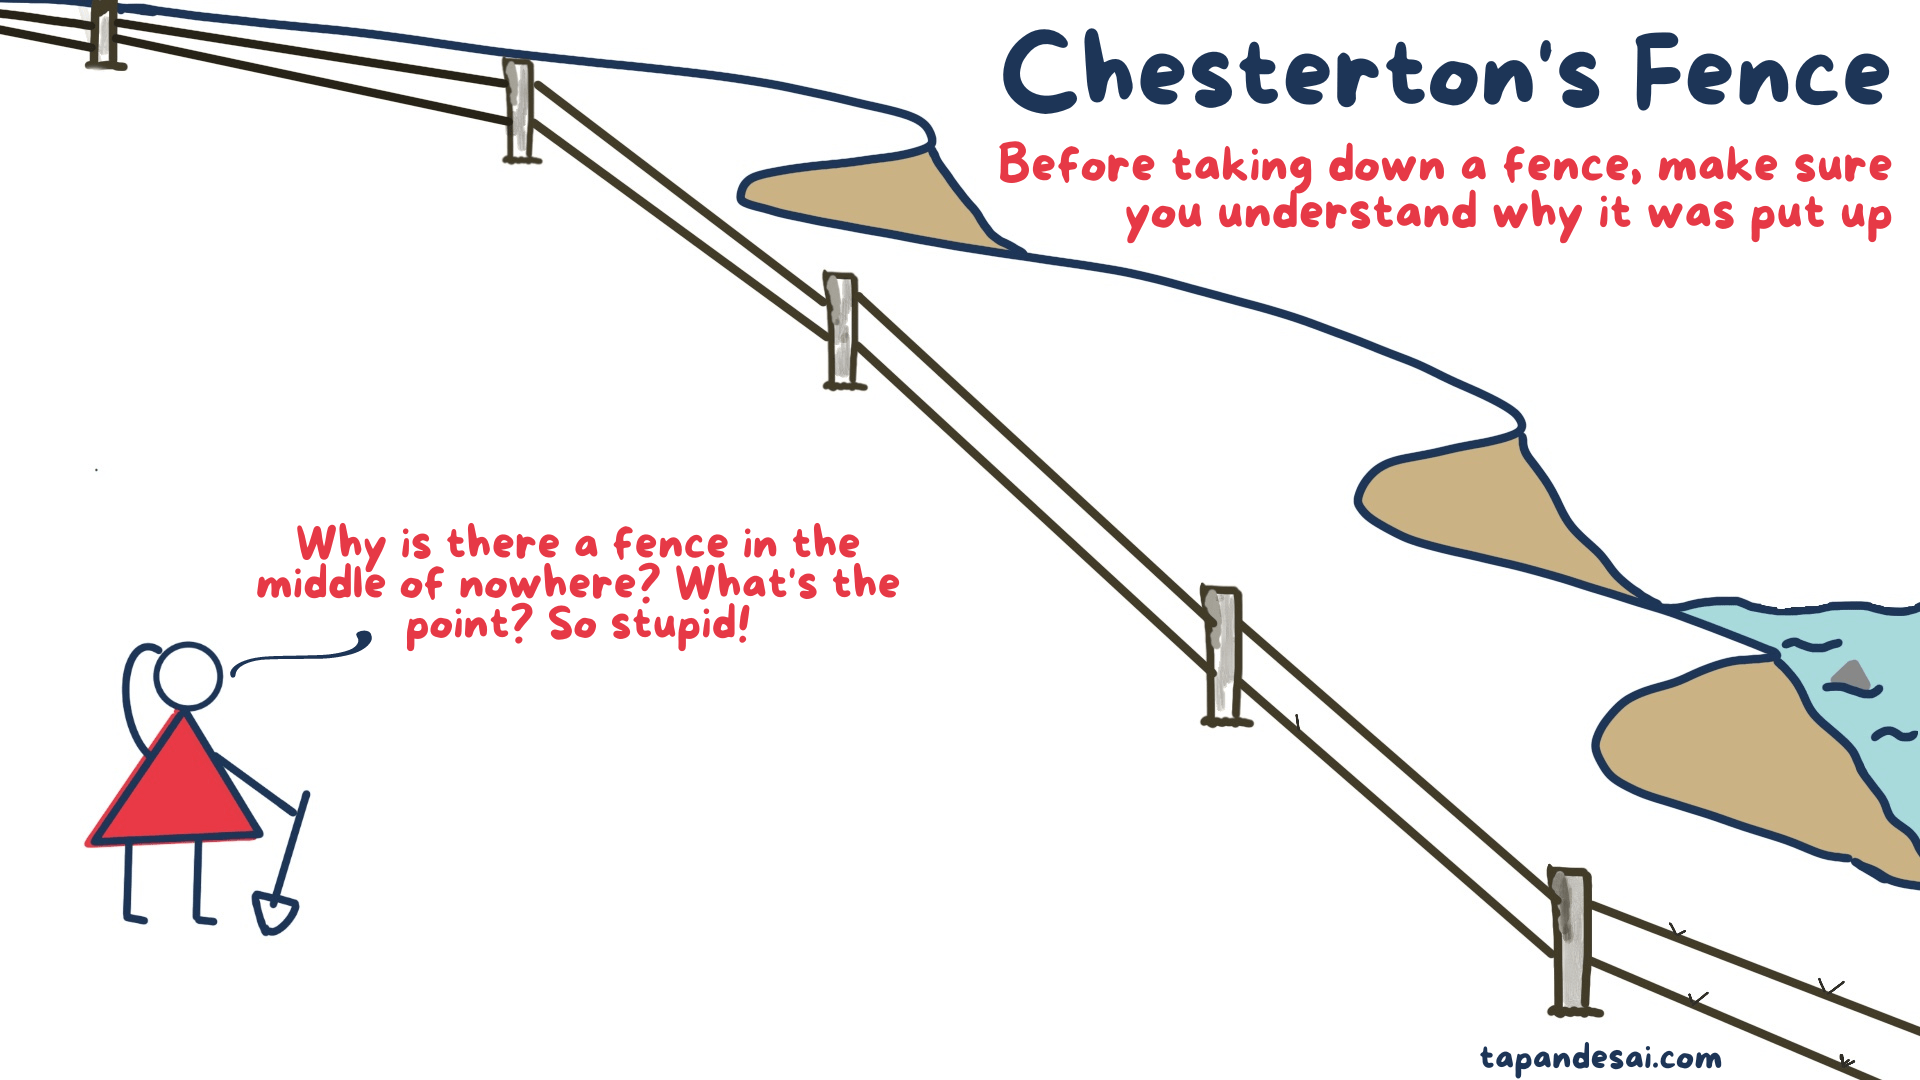 Chesterton's Fence Explained - Art Graphic - Tapan Desai